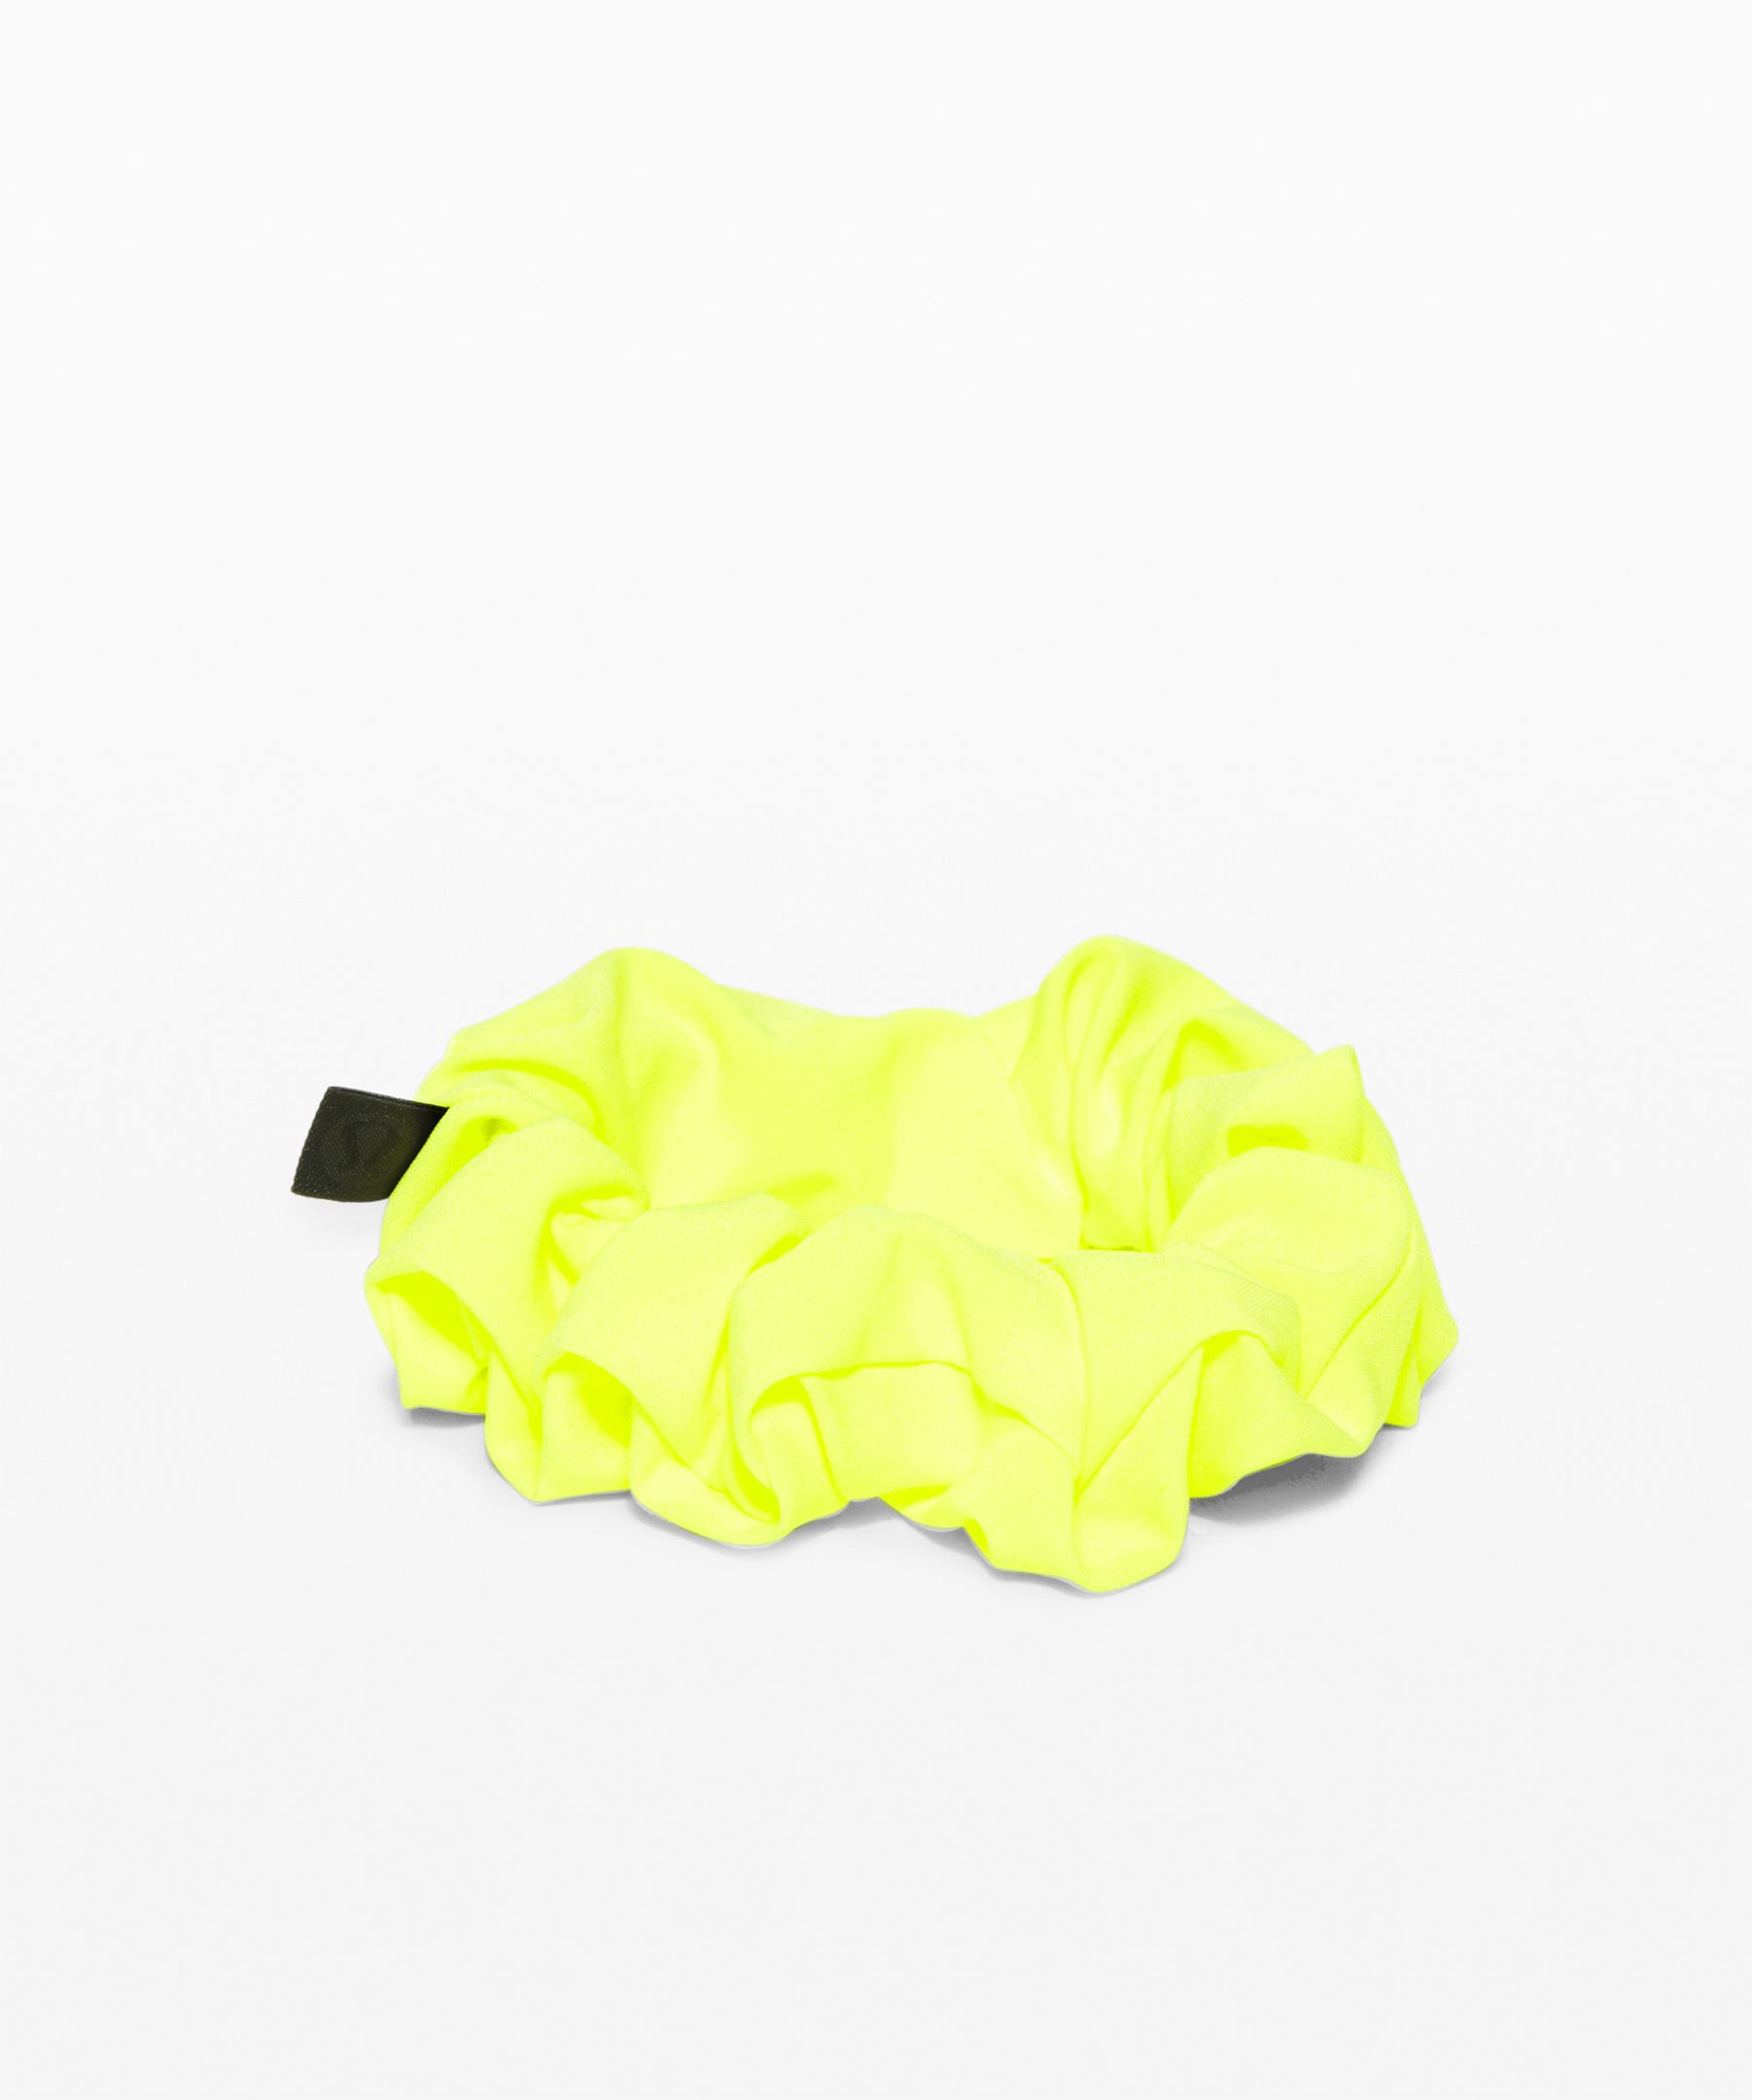 Lululemon Uplifting Scrunchie In Yellow